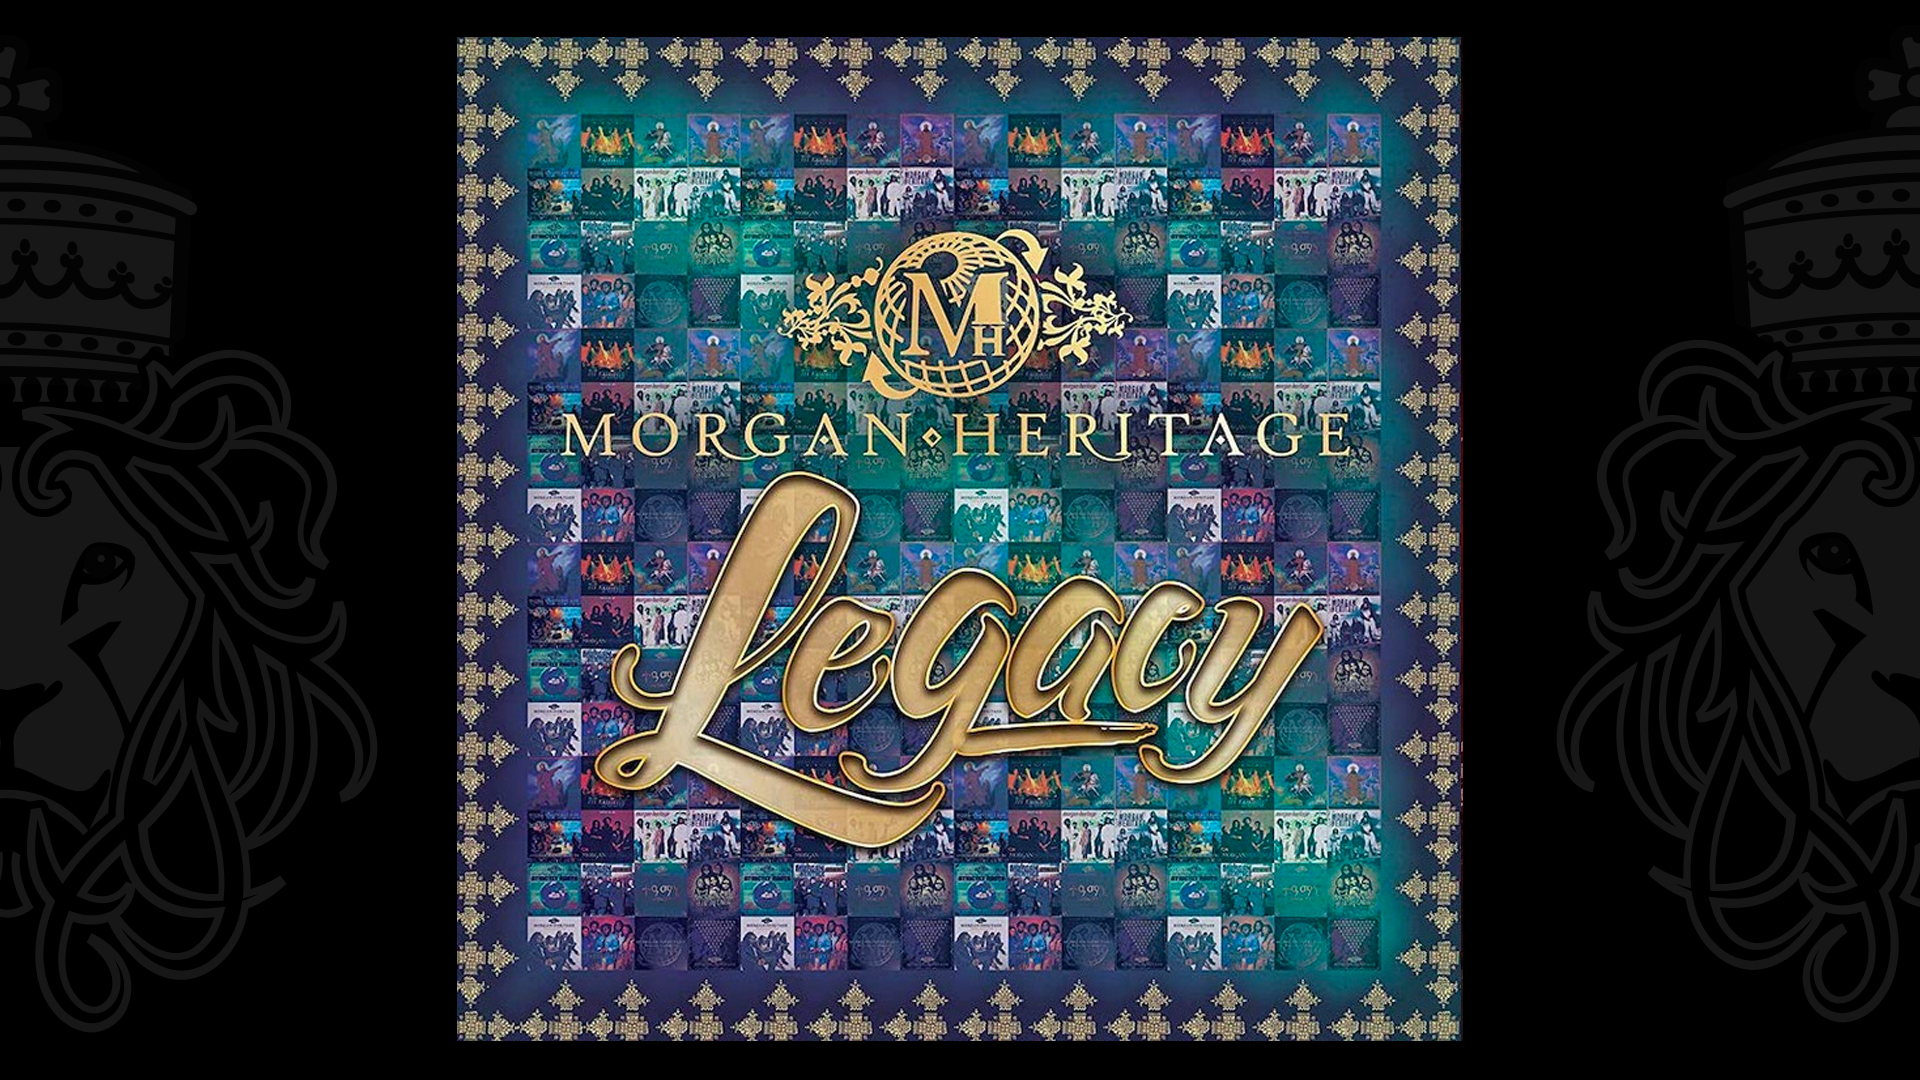 Morgan Heritage legacy